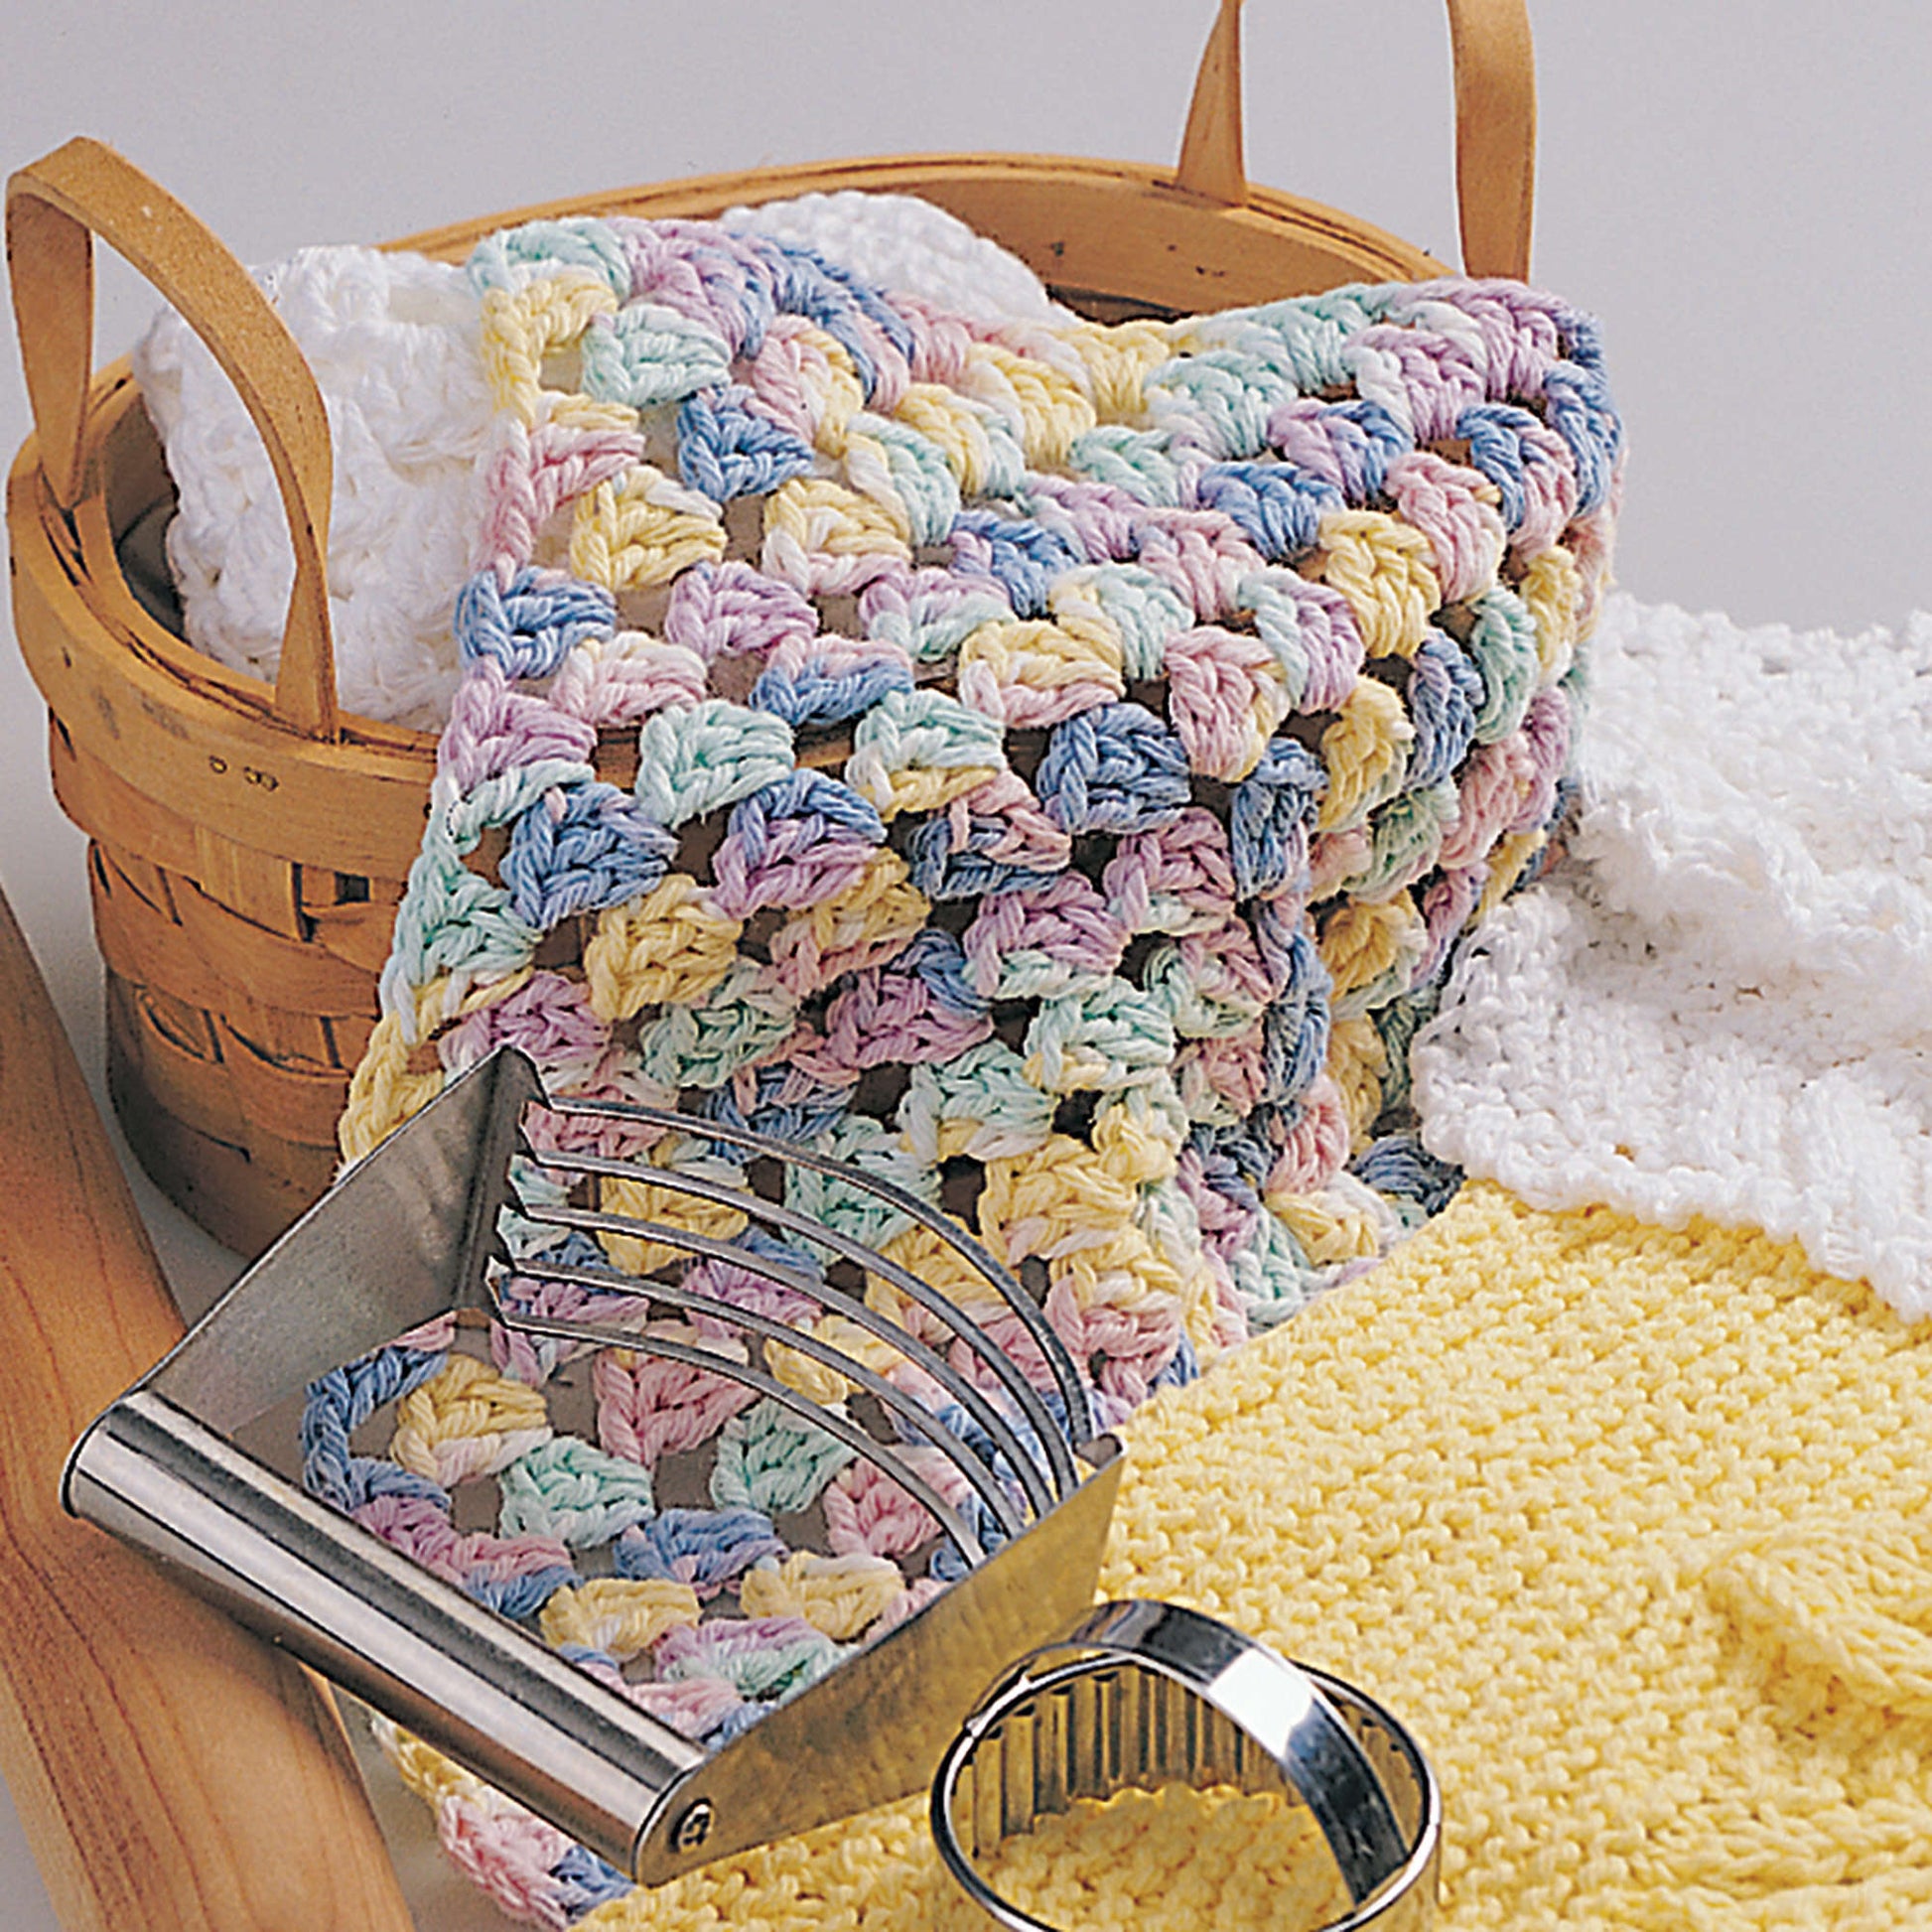 Bernat Granny Square Dishcloth Crochet Dishcloth made in Bernat Handicrafter Cotton yarn